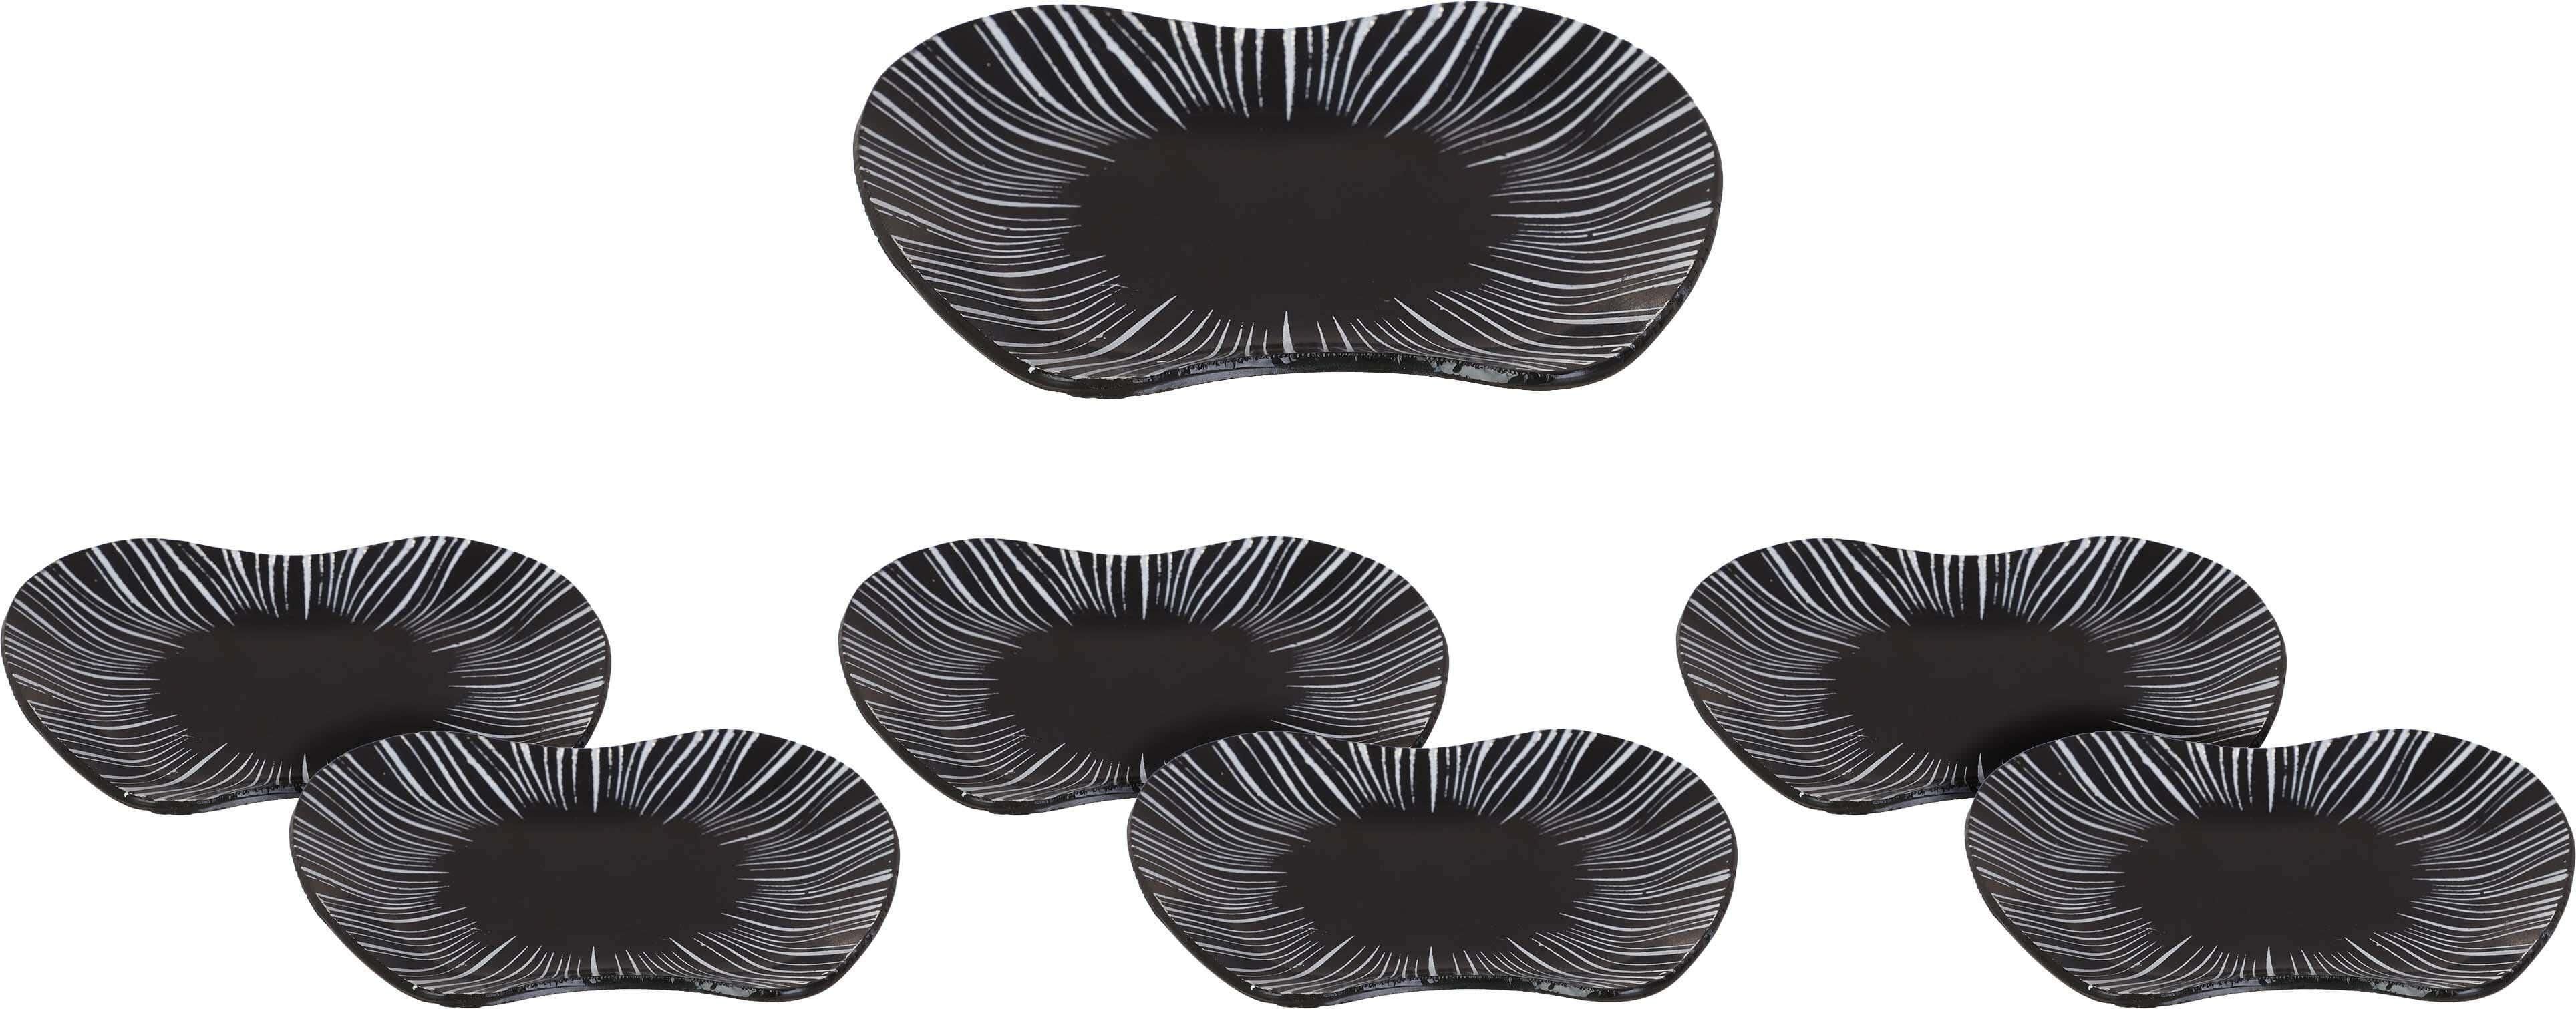 Get Arco Glass Arcopyrex Gateau Set, 7 Pieces - Black White with best offers | Raneen.com